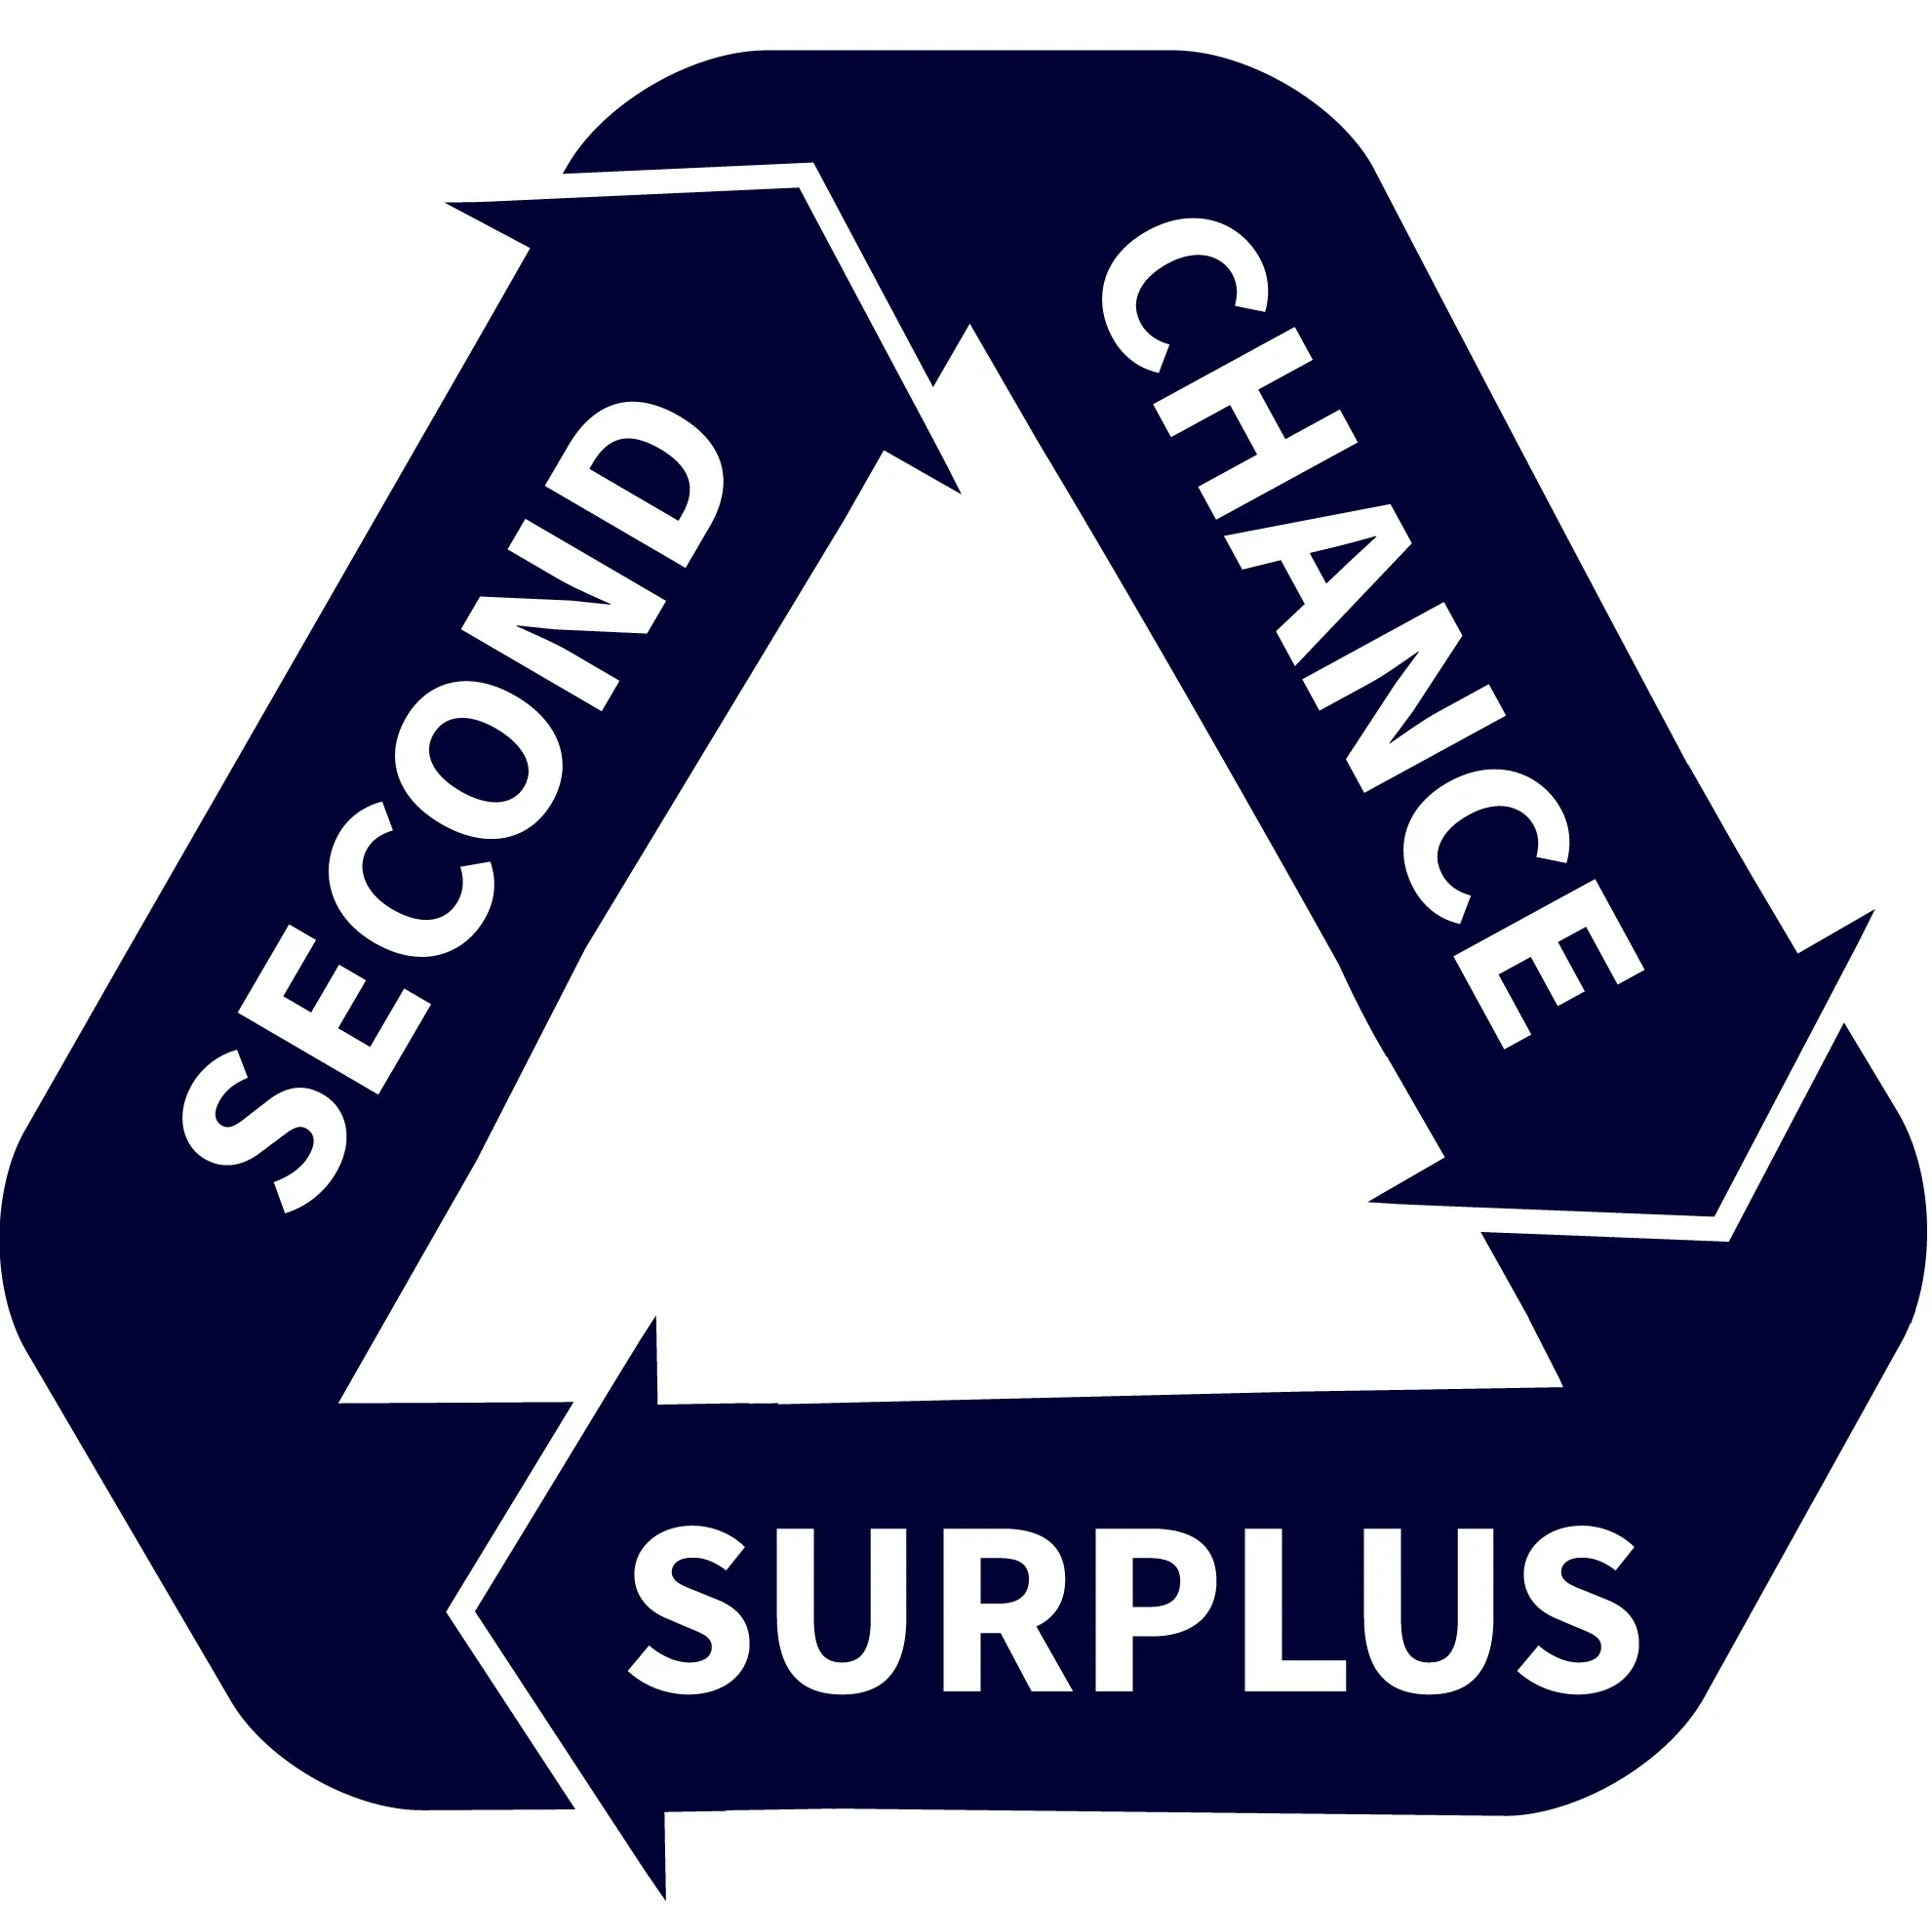 Second Chance Surplus